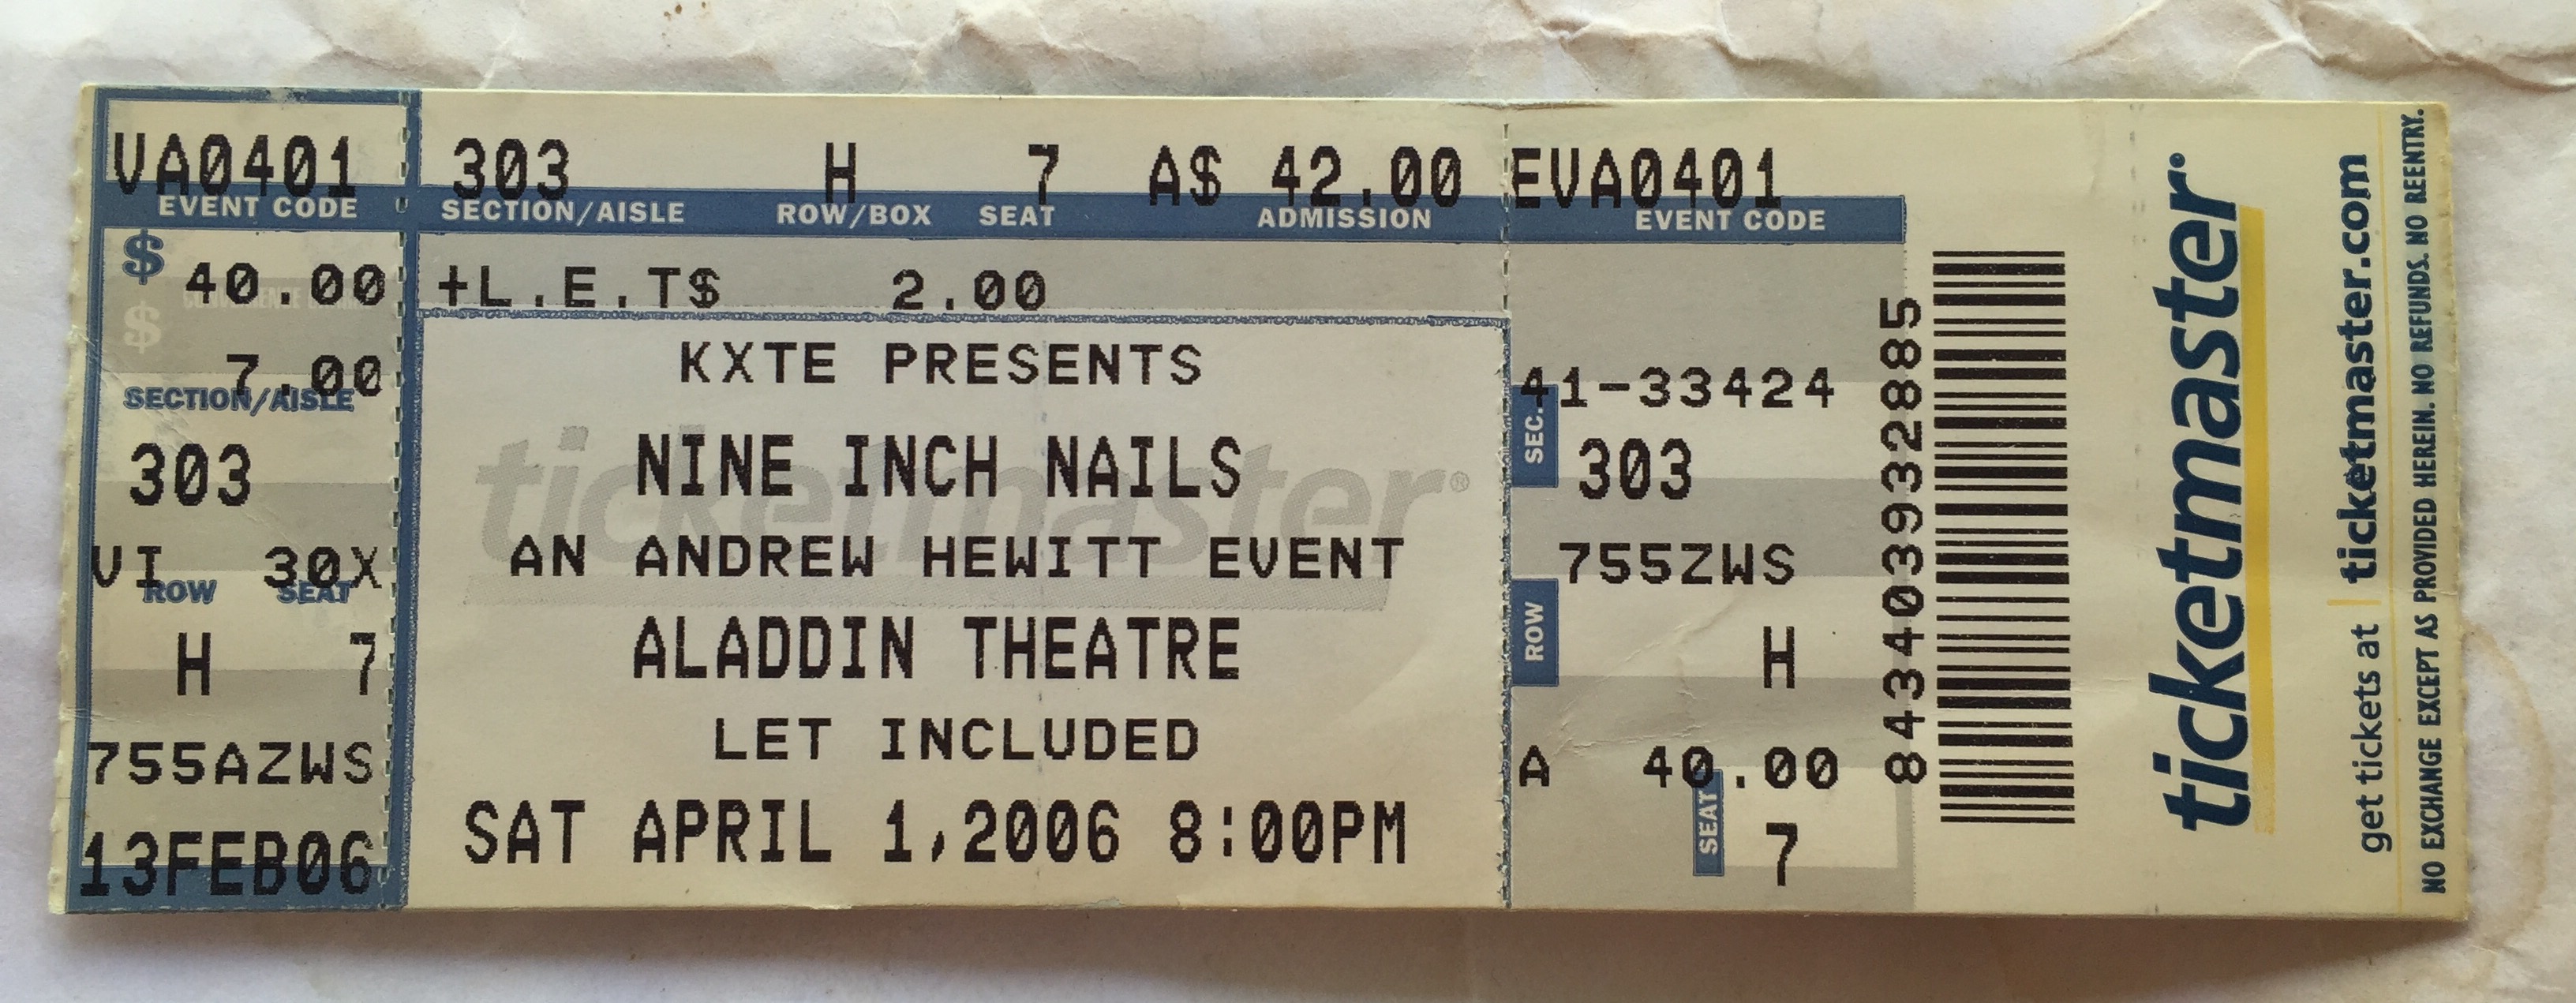 2006/04/01 Ticket